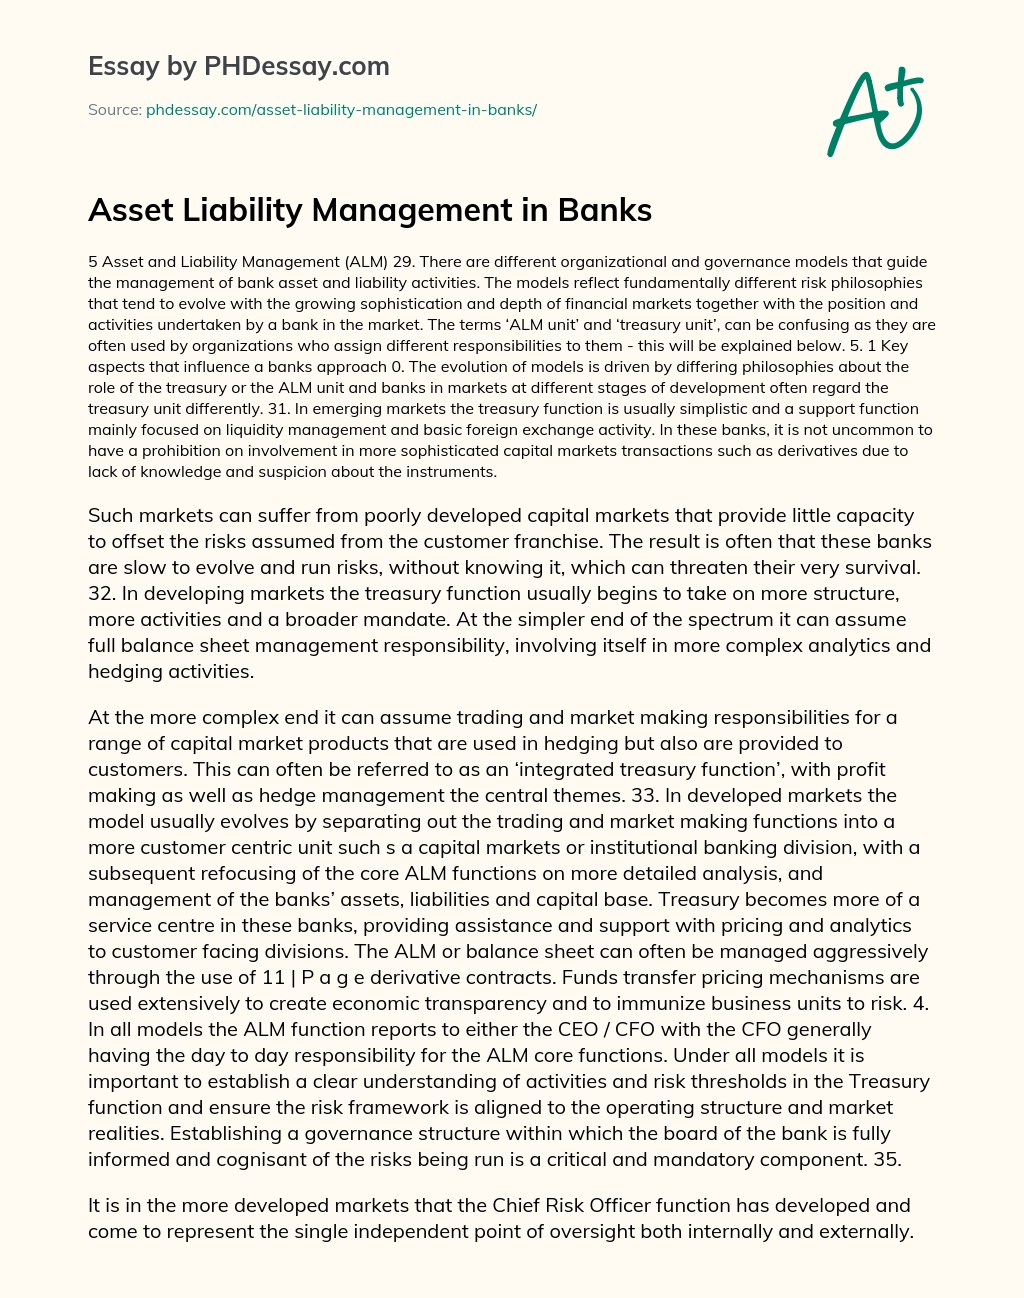 Asset Liability Management in Banks essay